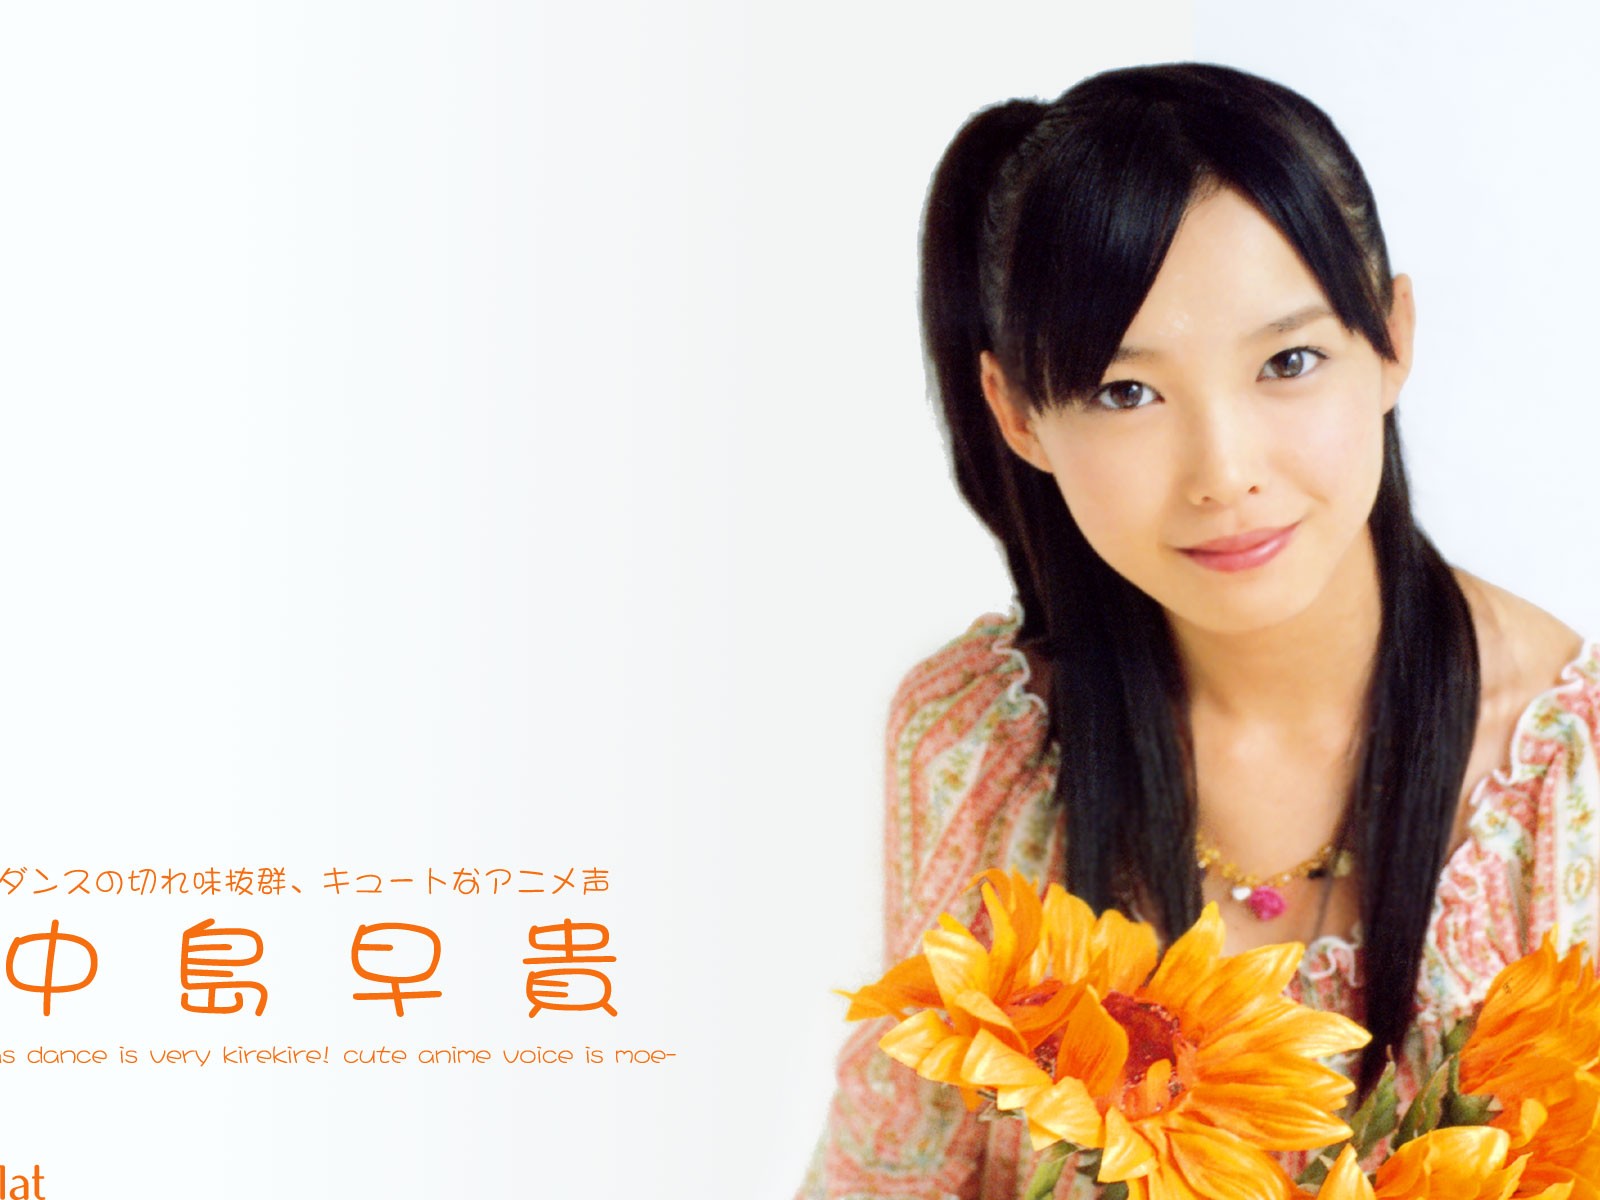 Cute Japanese beauty photo portfolio #15 - 1600x1200